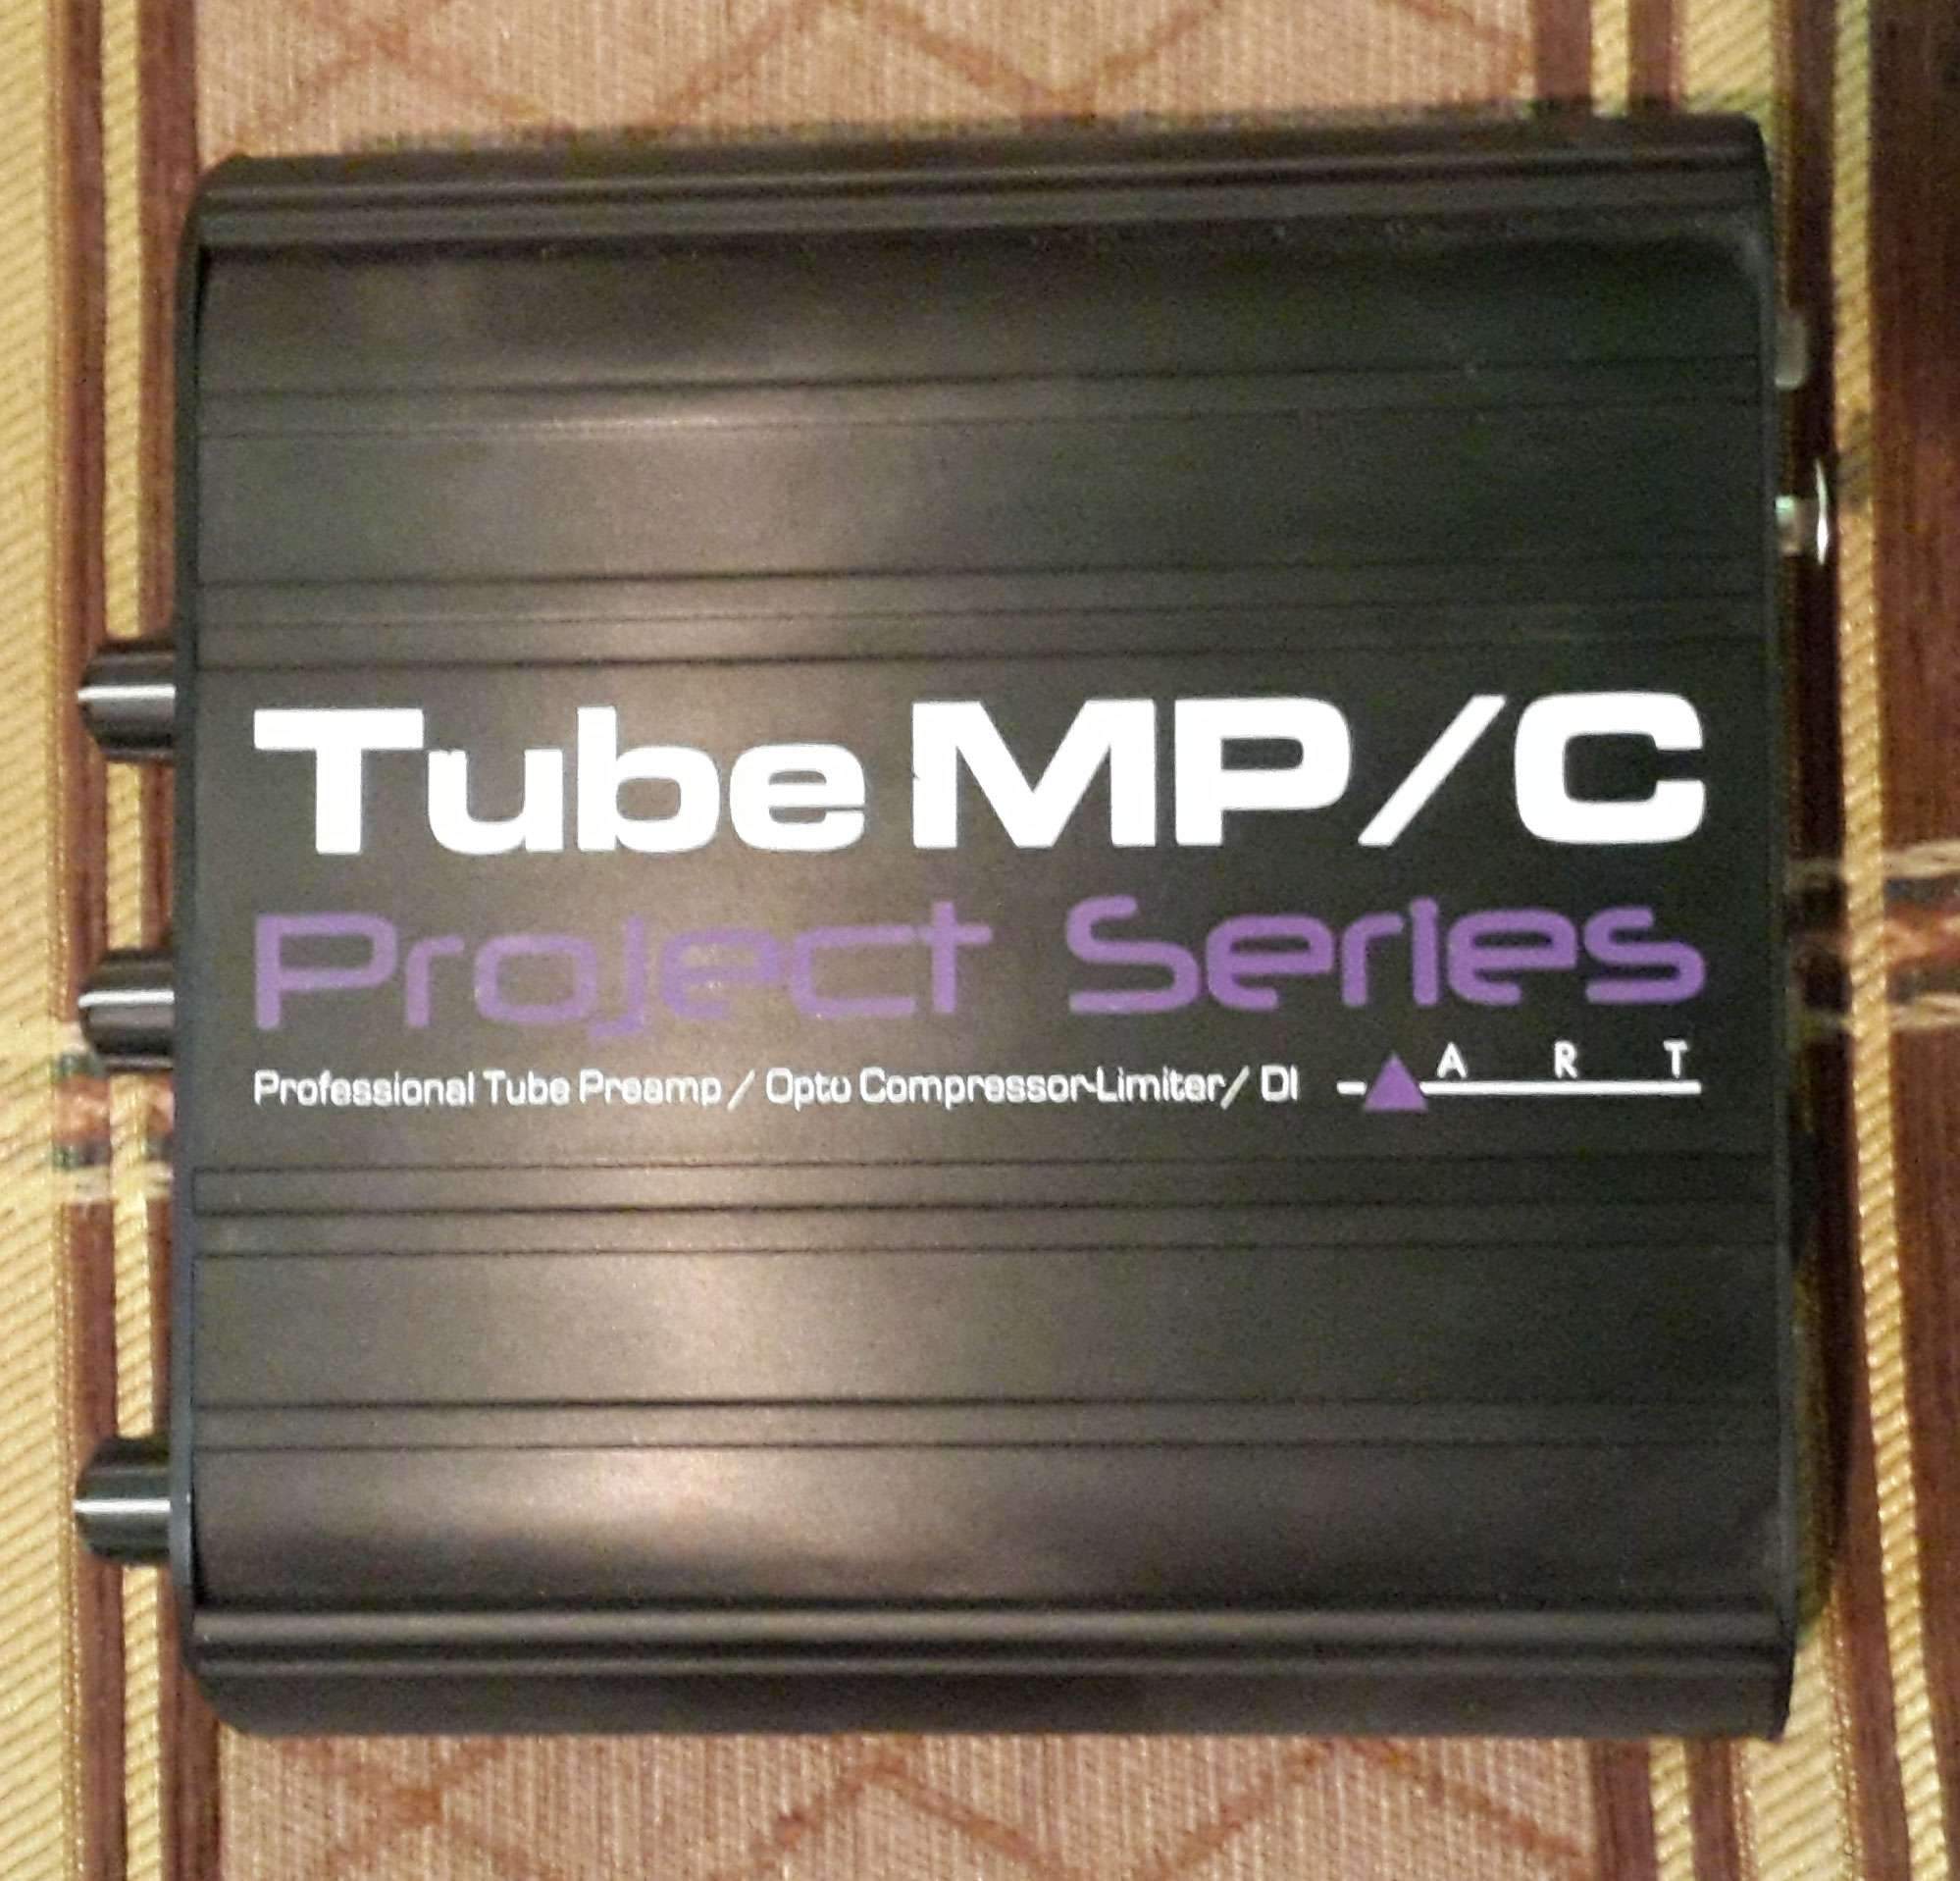 Tube Mp C